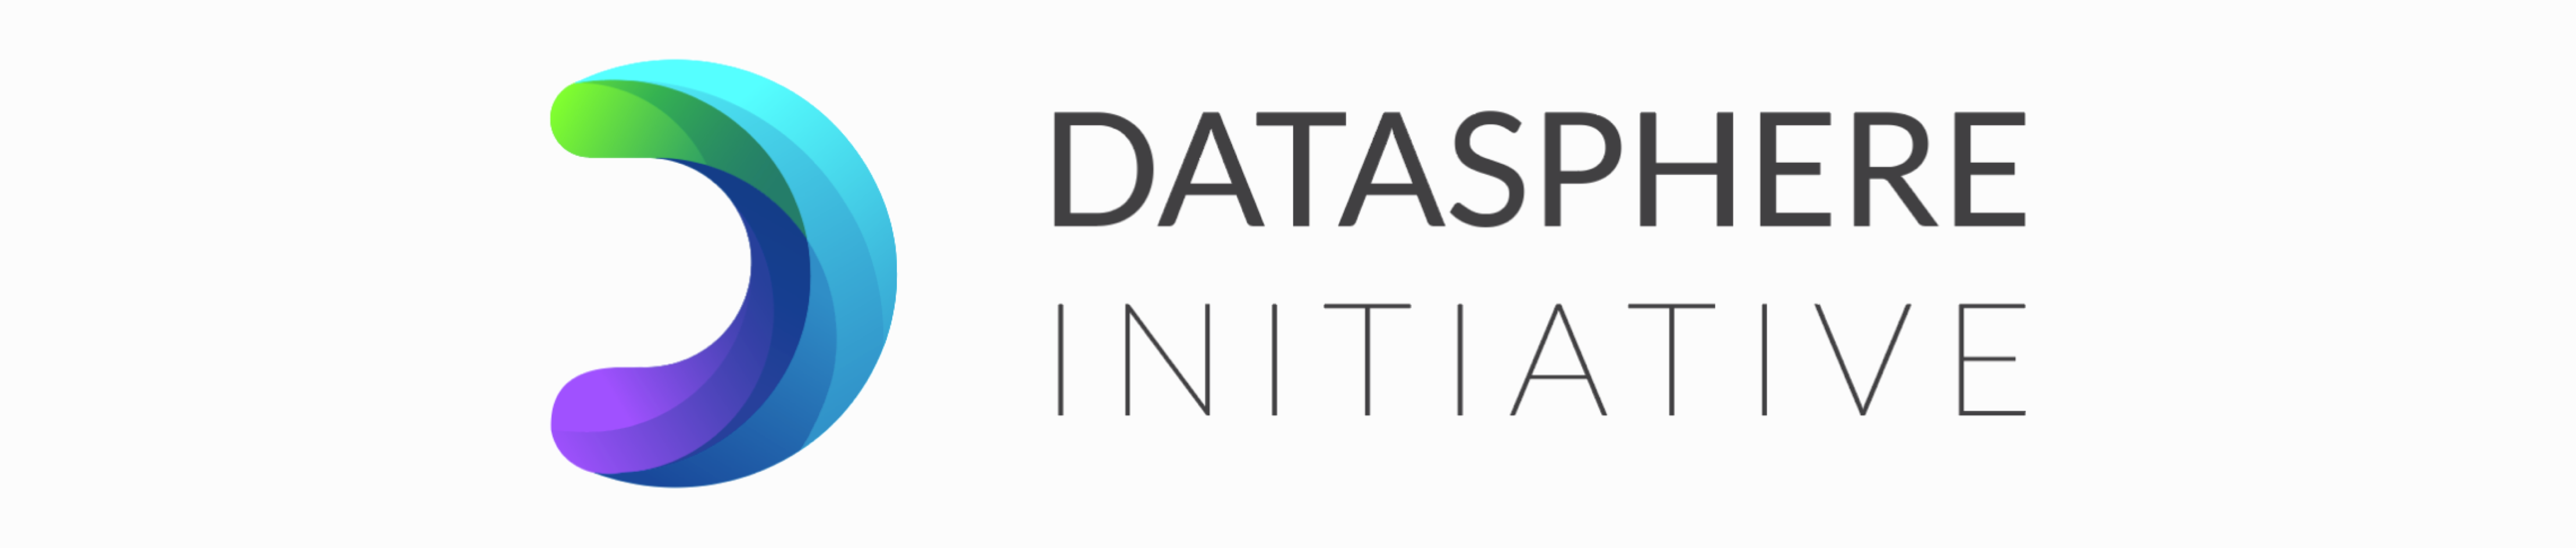 The Datasphere Initiative